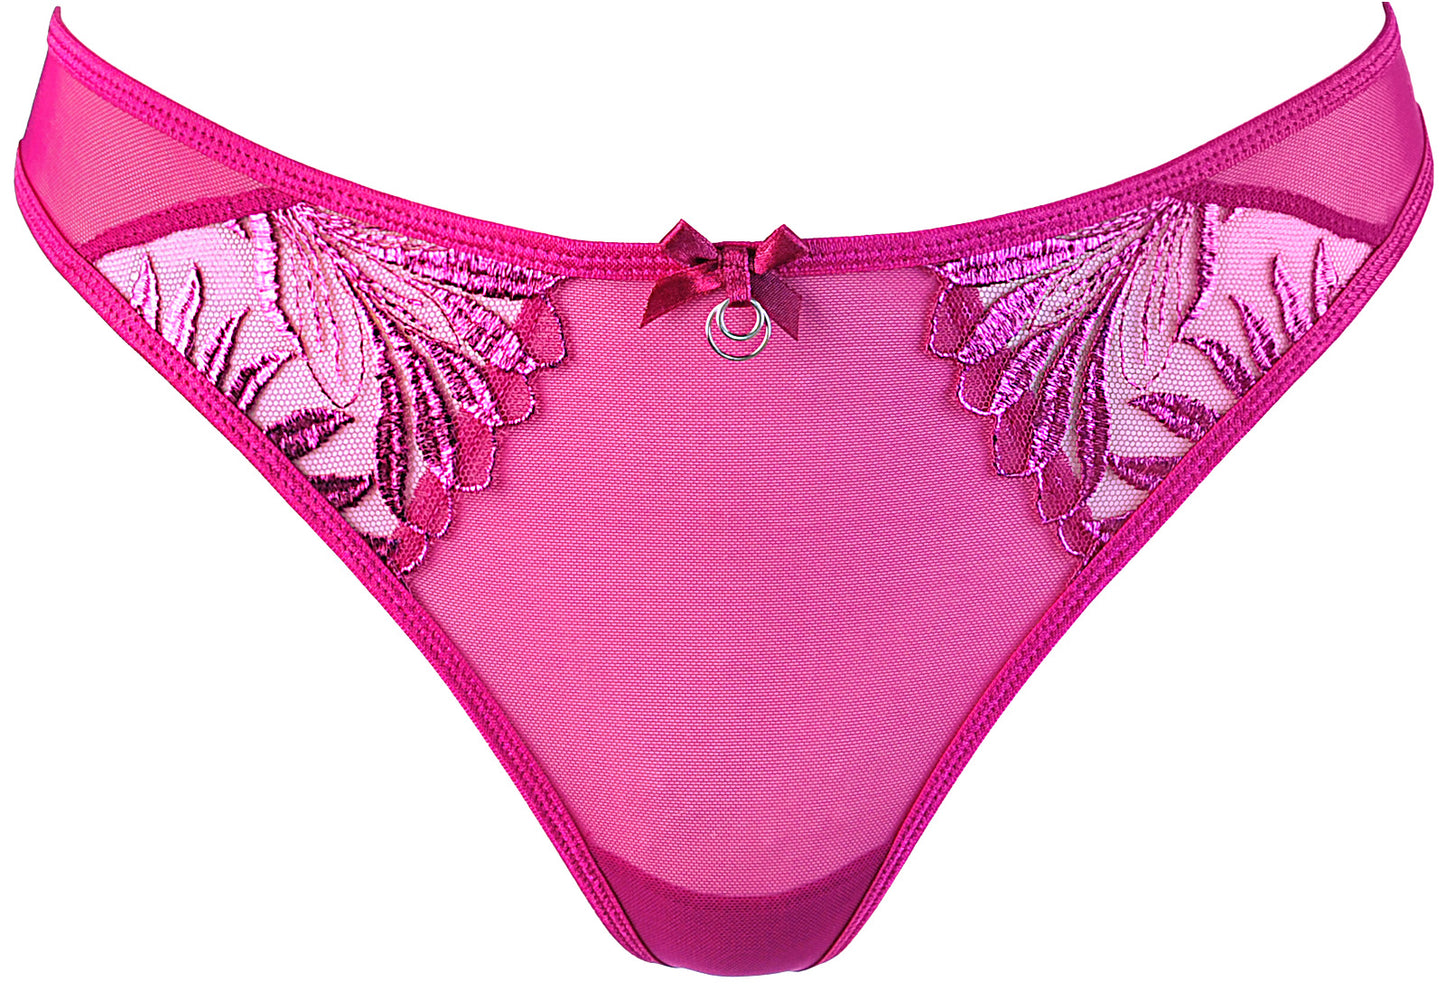 Axami 10258 Embroidery Thong Panty Brillance Pink Shimmer